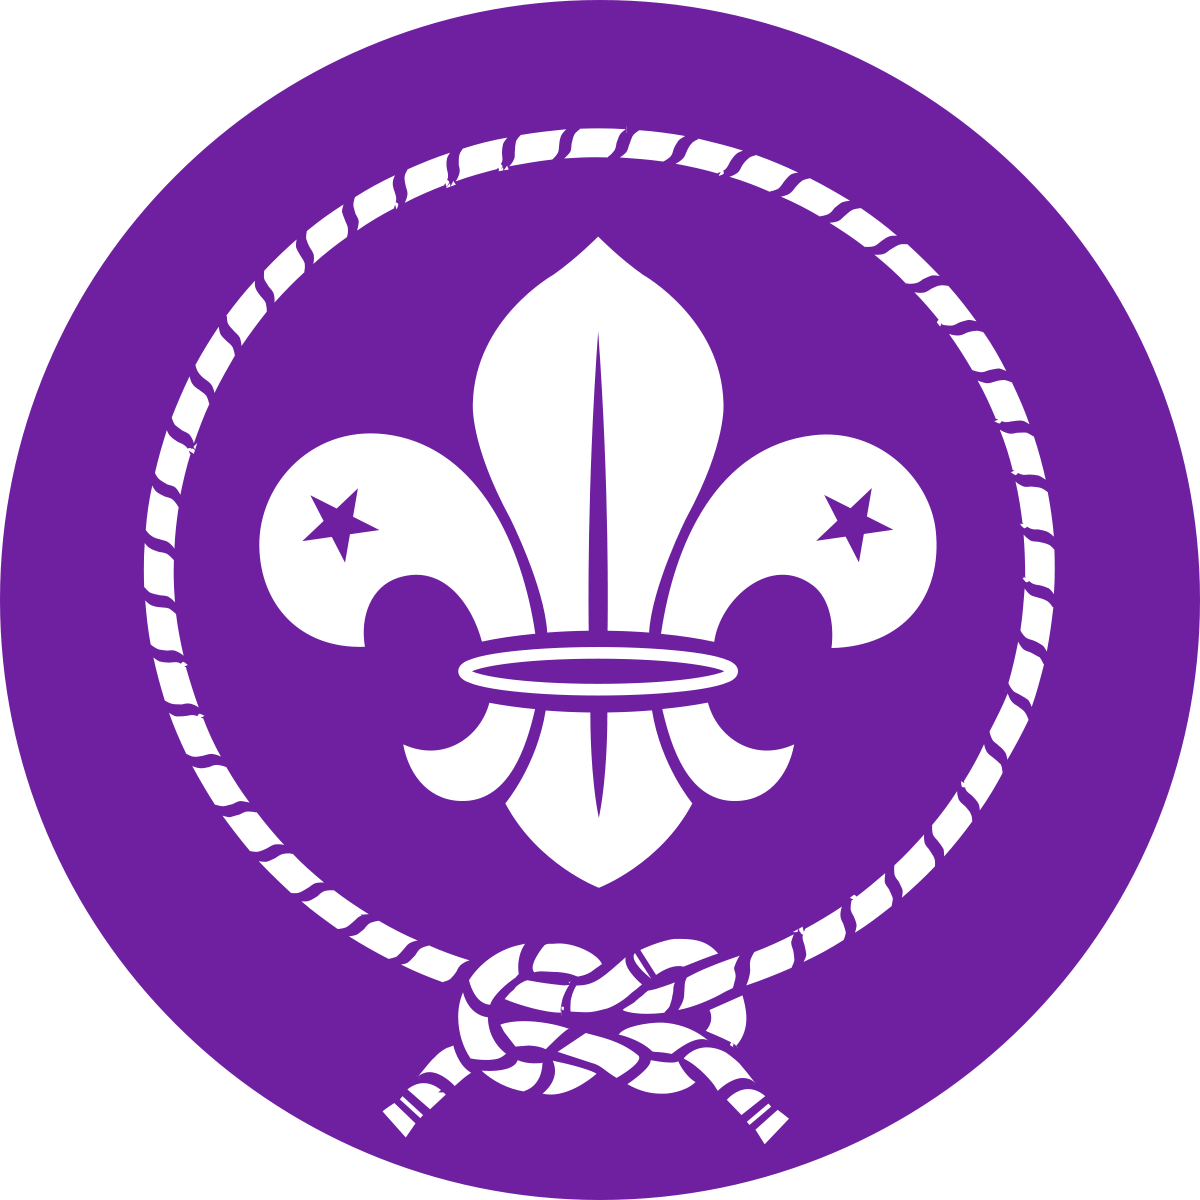 International Scout Logo - World Scout Emblem